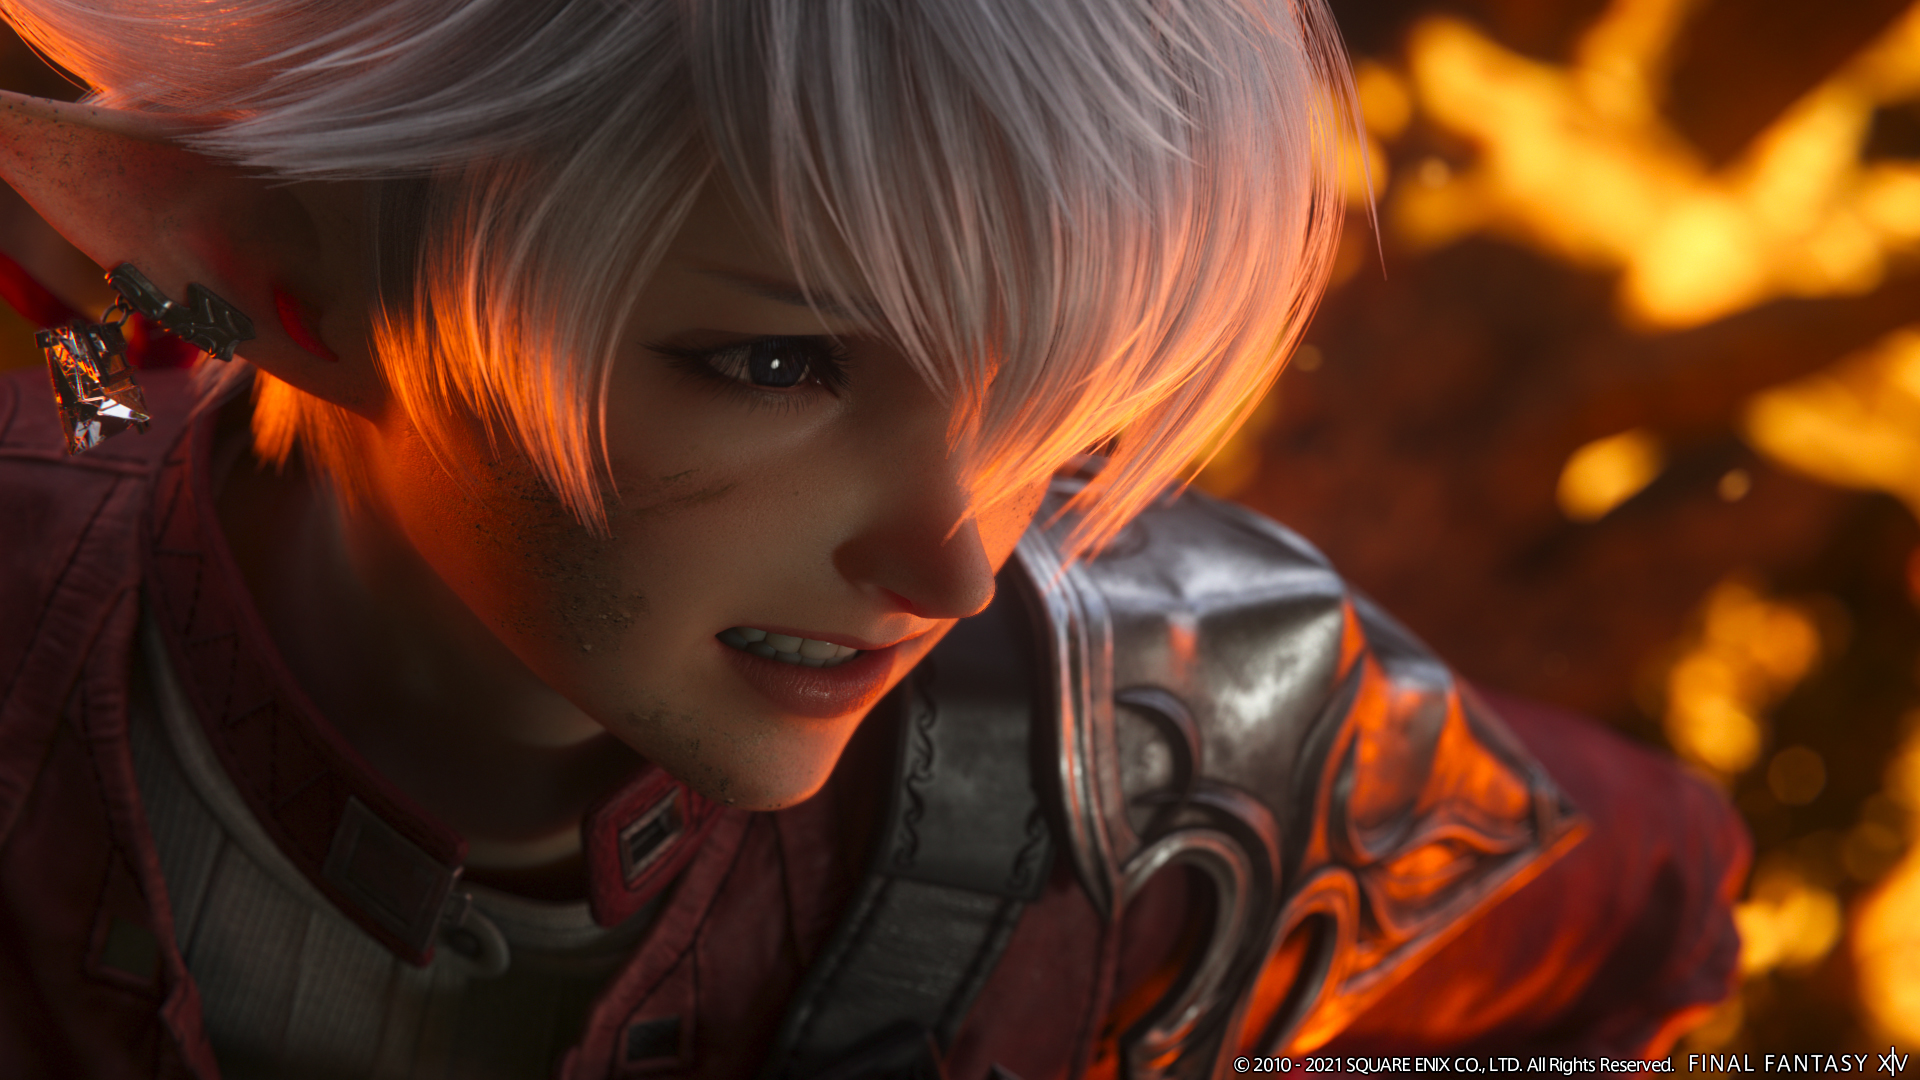 Final Fantasy 14 director on killing off characters in Endwalker | GamesRadar+